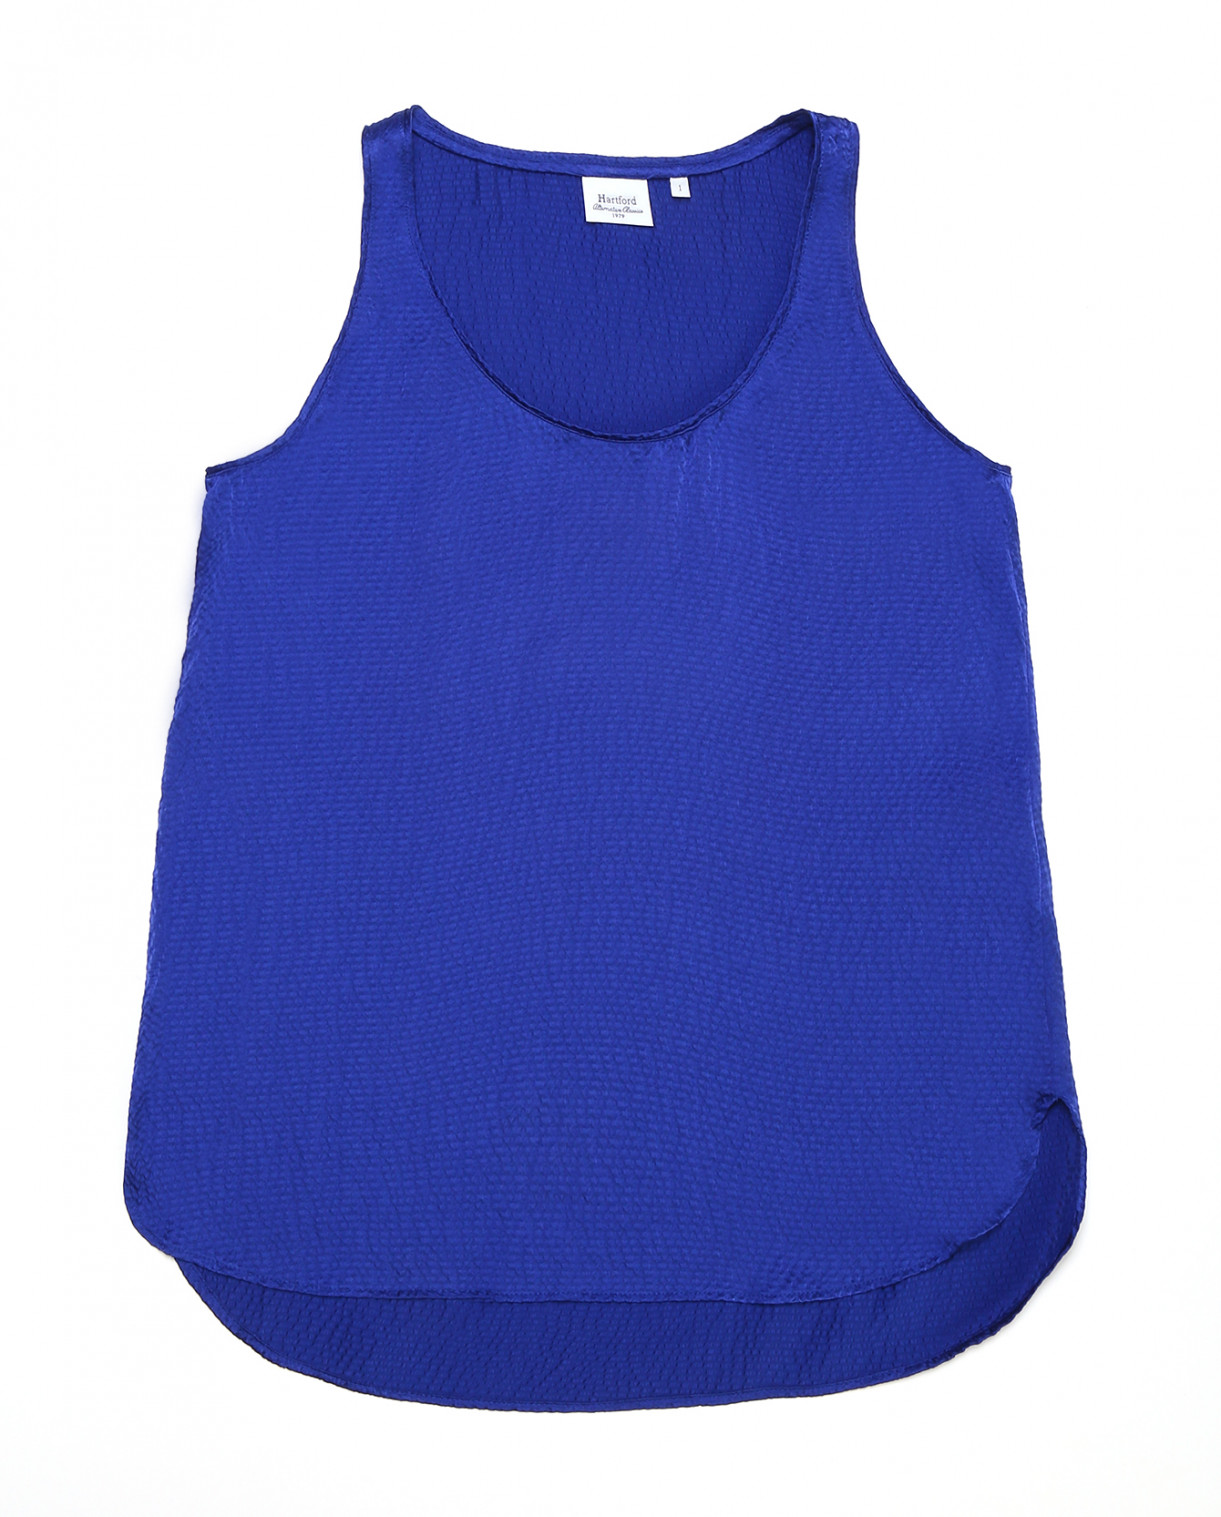 Шелковая блуза без рукавов Hartford  –  Общий вид  – Цвет:  Синий